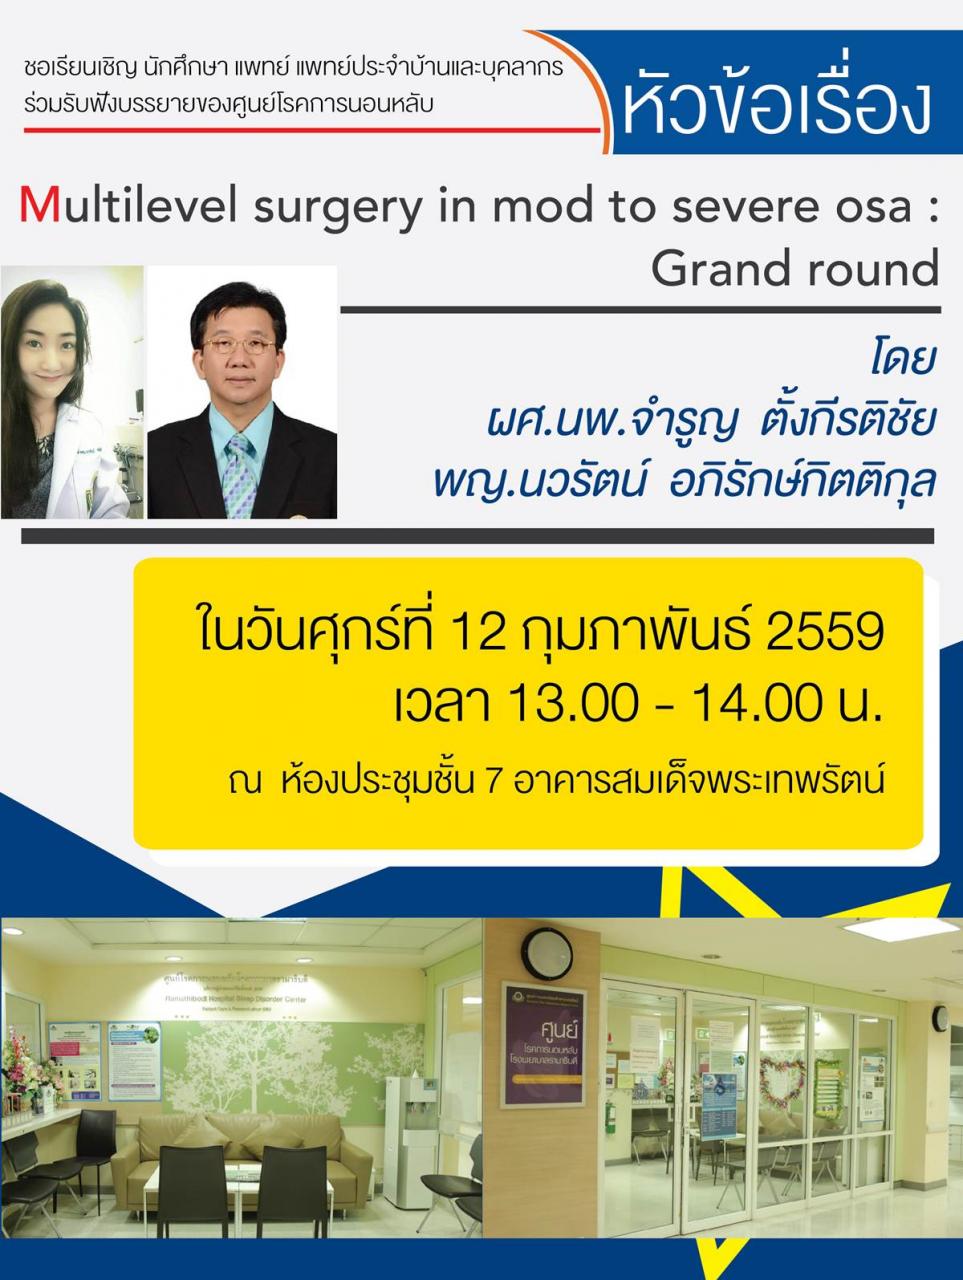 Multilevel surgery in mod severe osa : Grand round